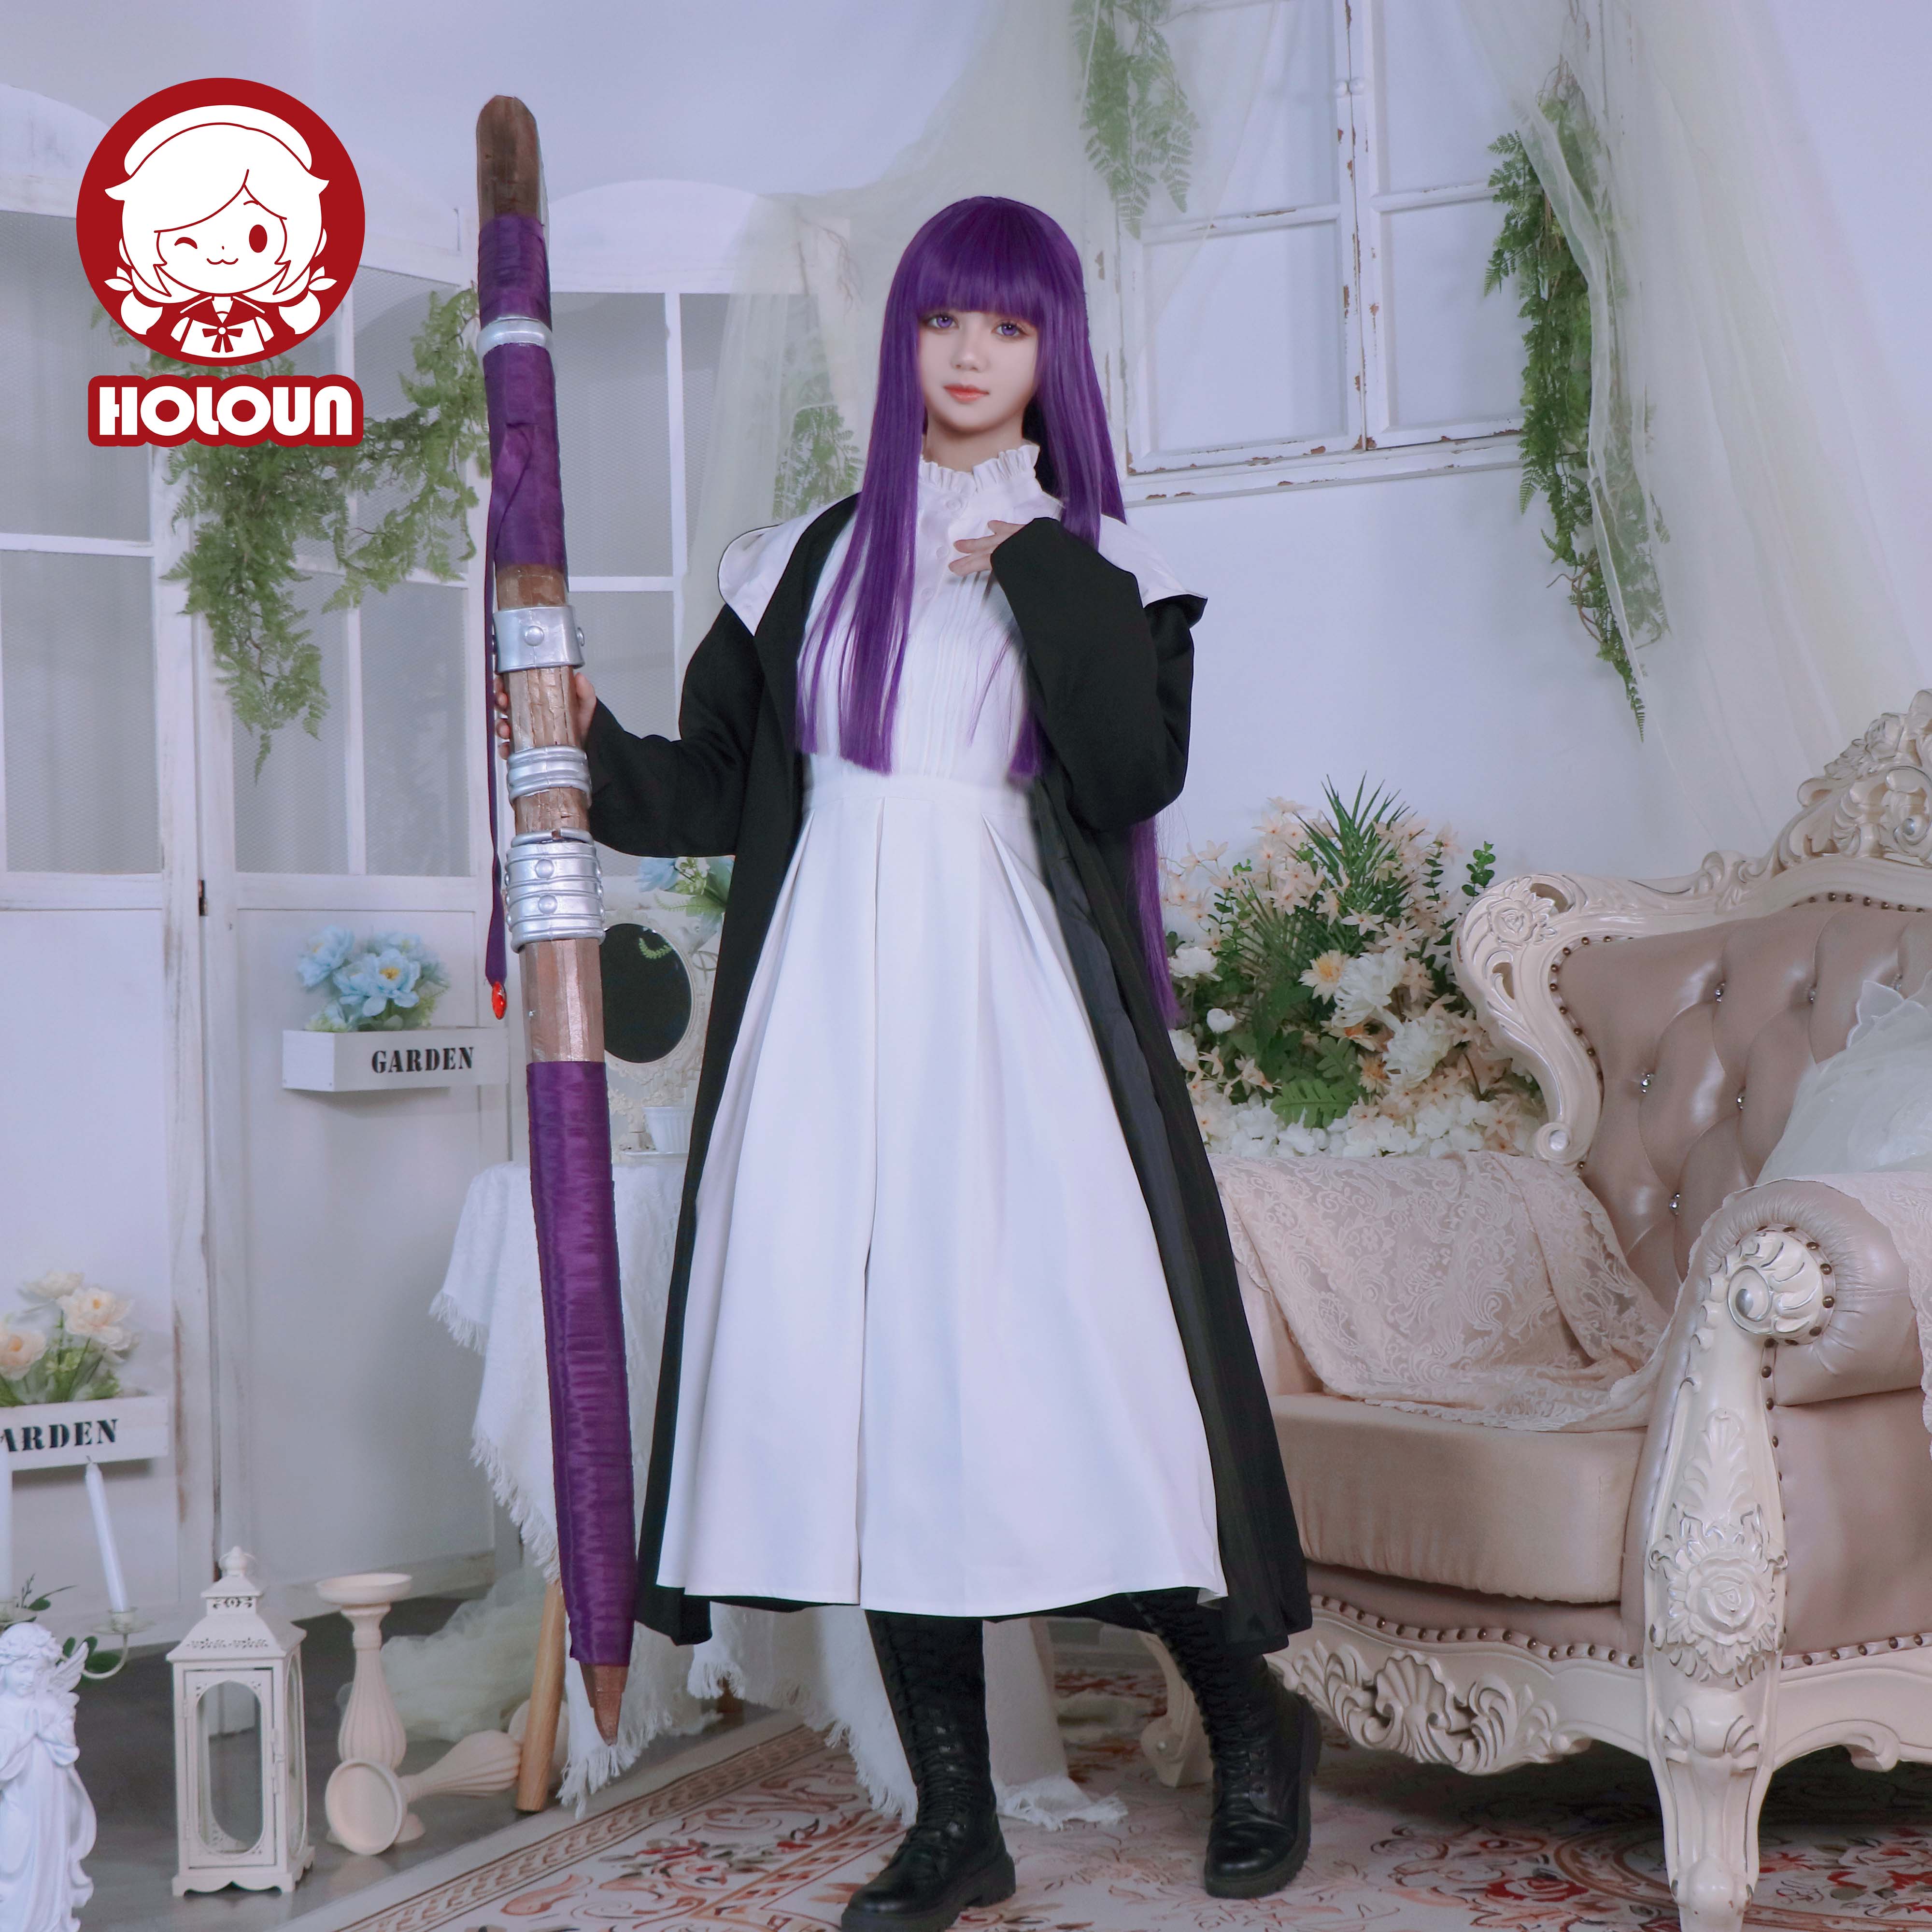 HOLOUN Frieren Beyond Journey's End Anime Fern Cosplay Costume Wig Cloak Coat Dress Christmas Gift